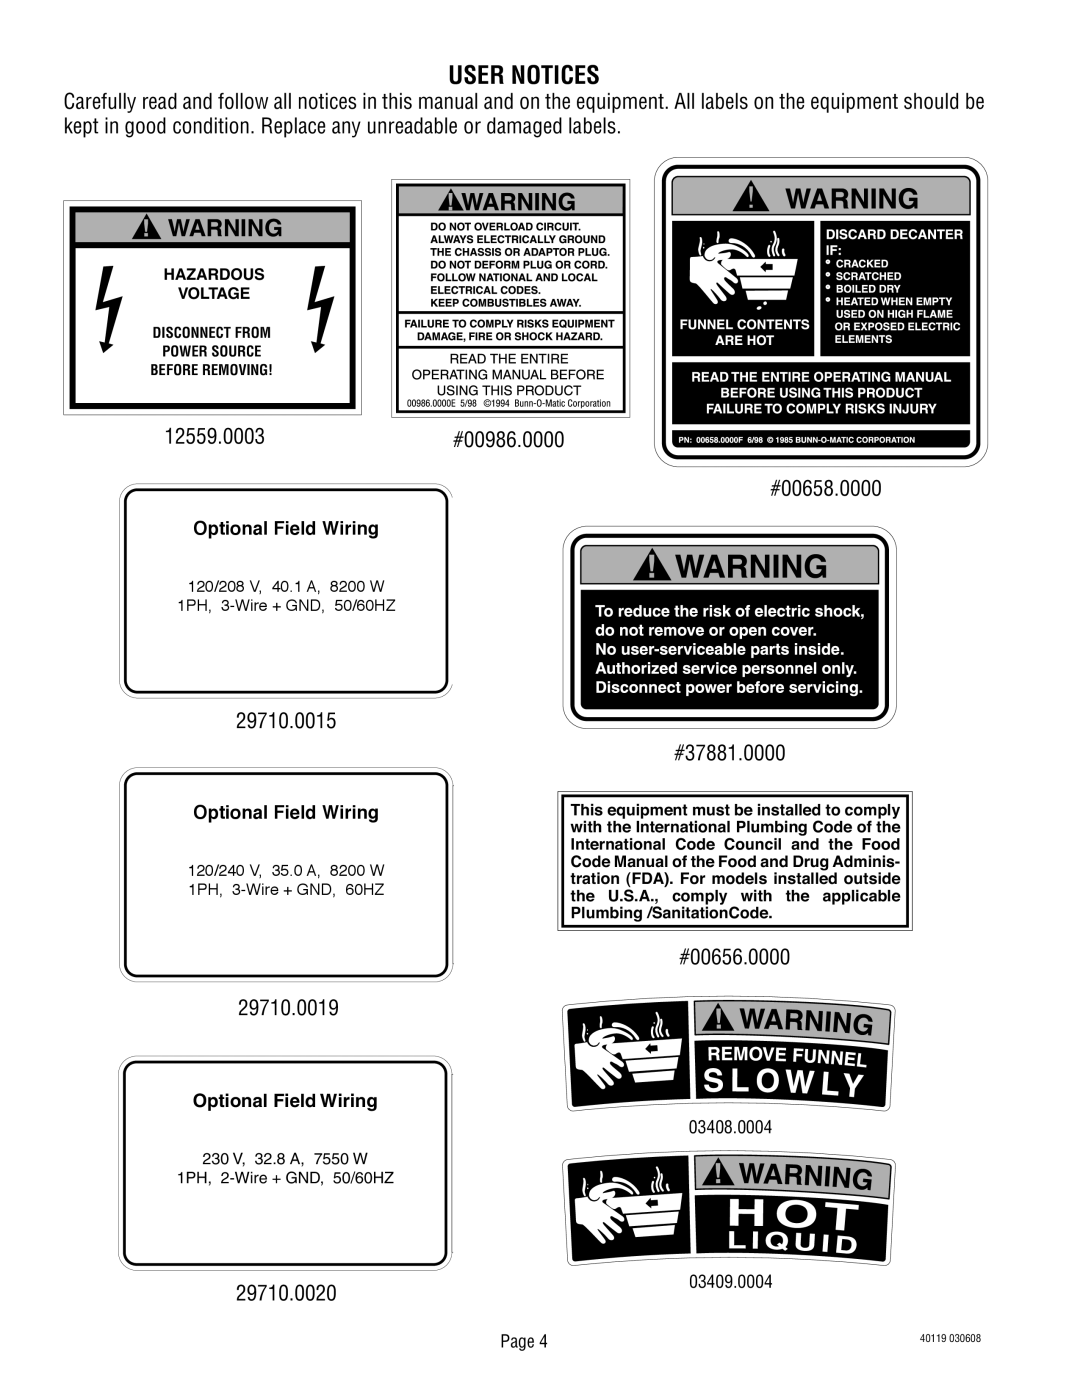 Bunn TITAN DUAL manual User Notices, #00986.0000, 29710.0020, Optional Field Wiring, Hazardous Voltage 